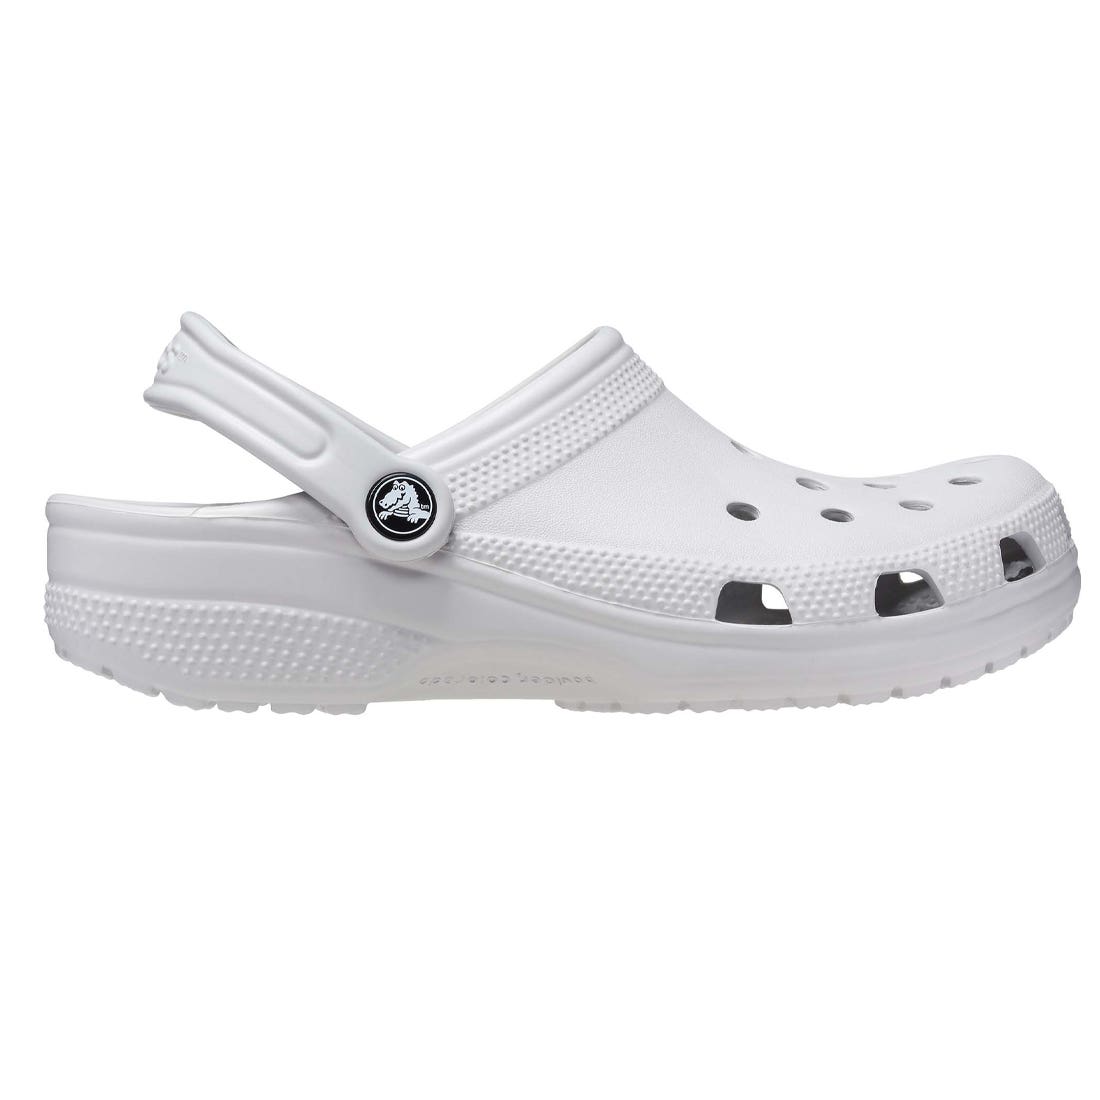 Crocs Classic Clog Lifestyle Shoe